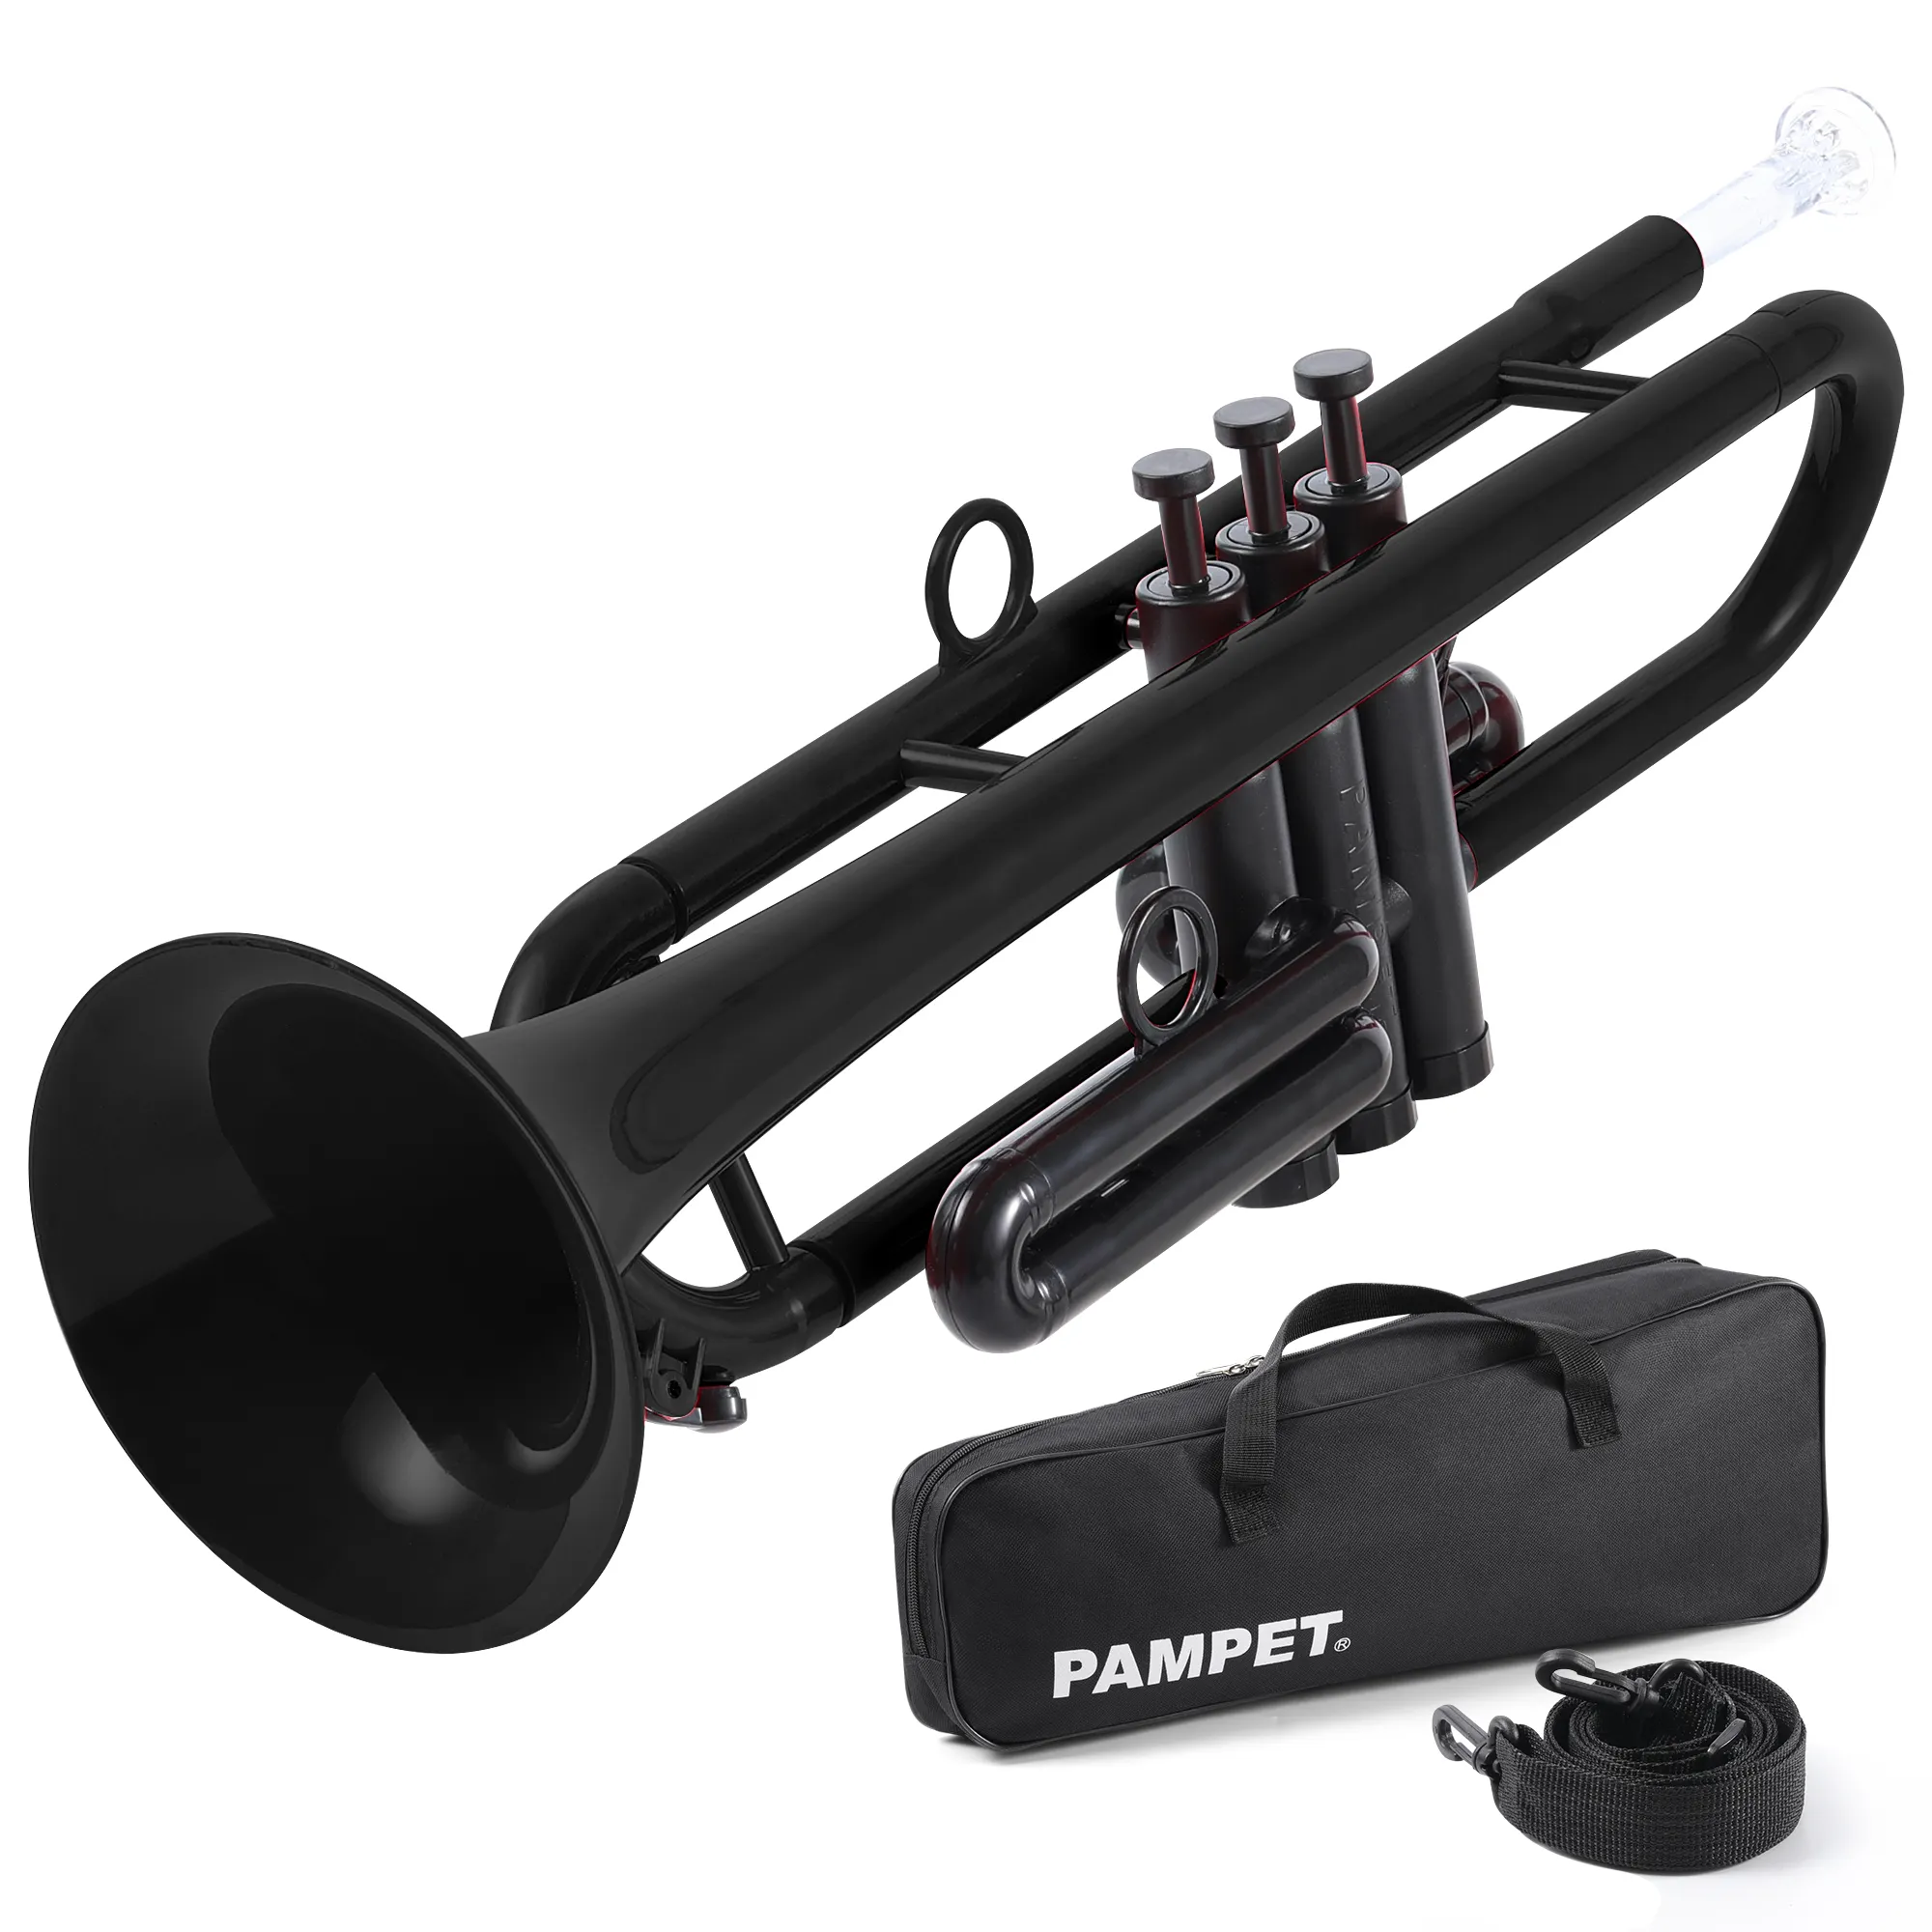 Fabriek Outlet Zwart Trompet Plastic Standaard Bb Muziekinstrumenten Beginner Trompet B Student Trompet Met Draagtas